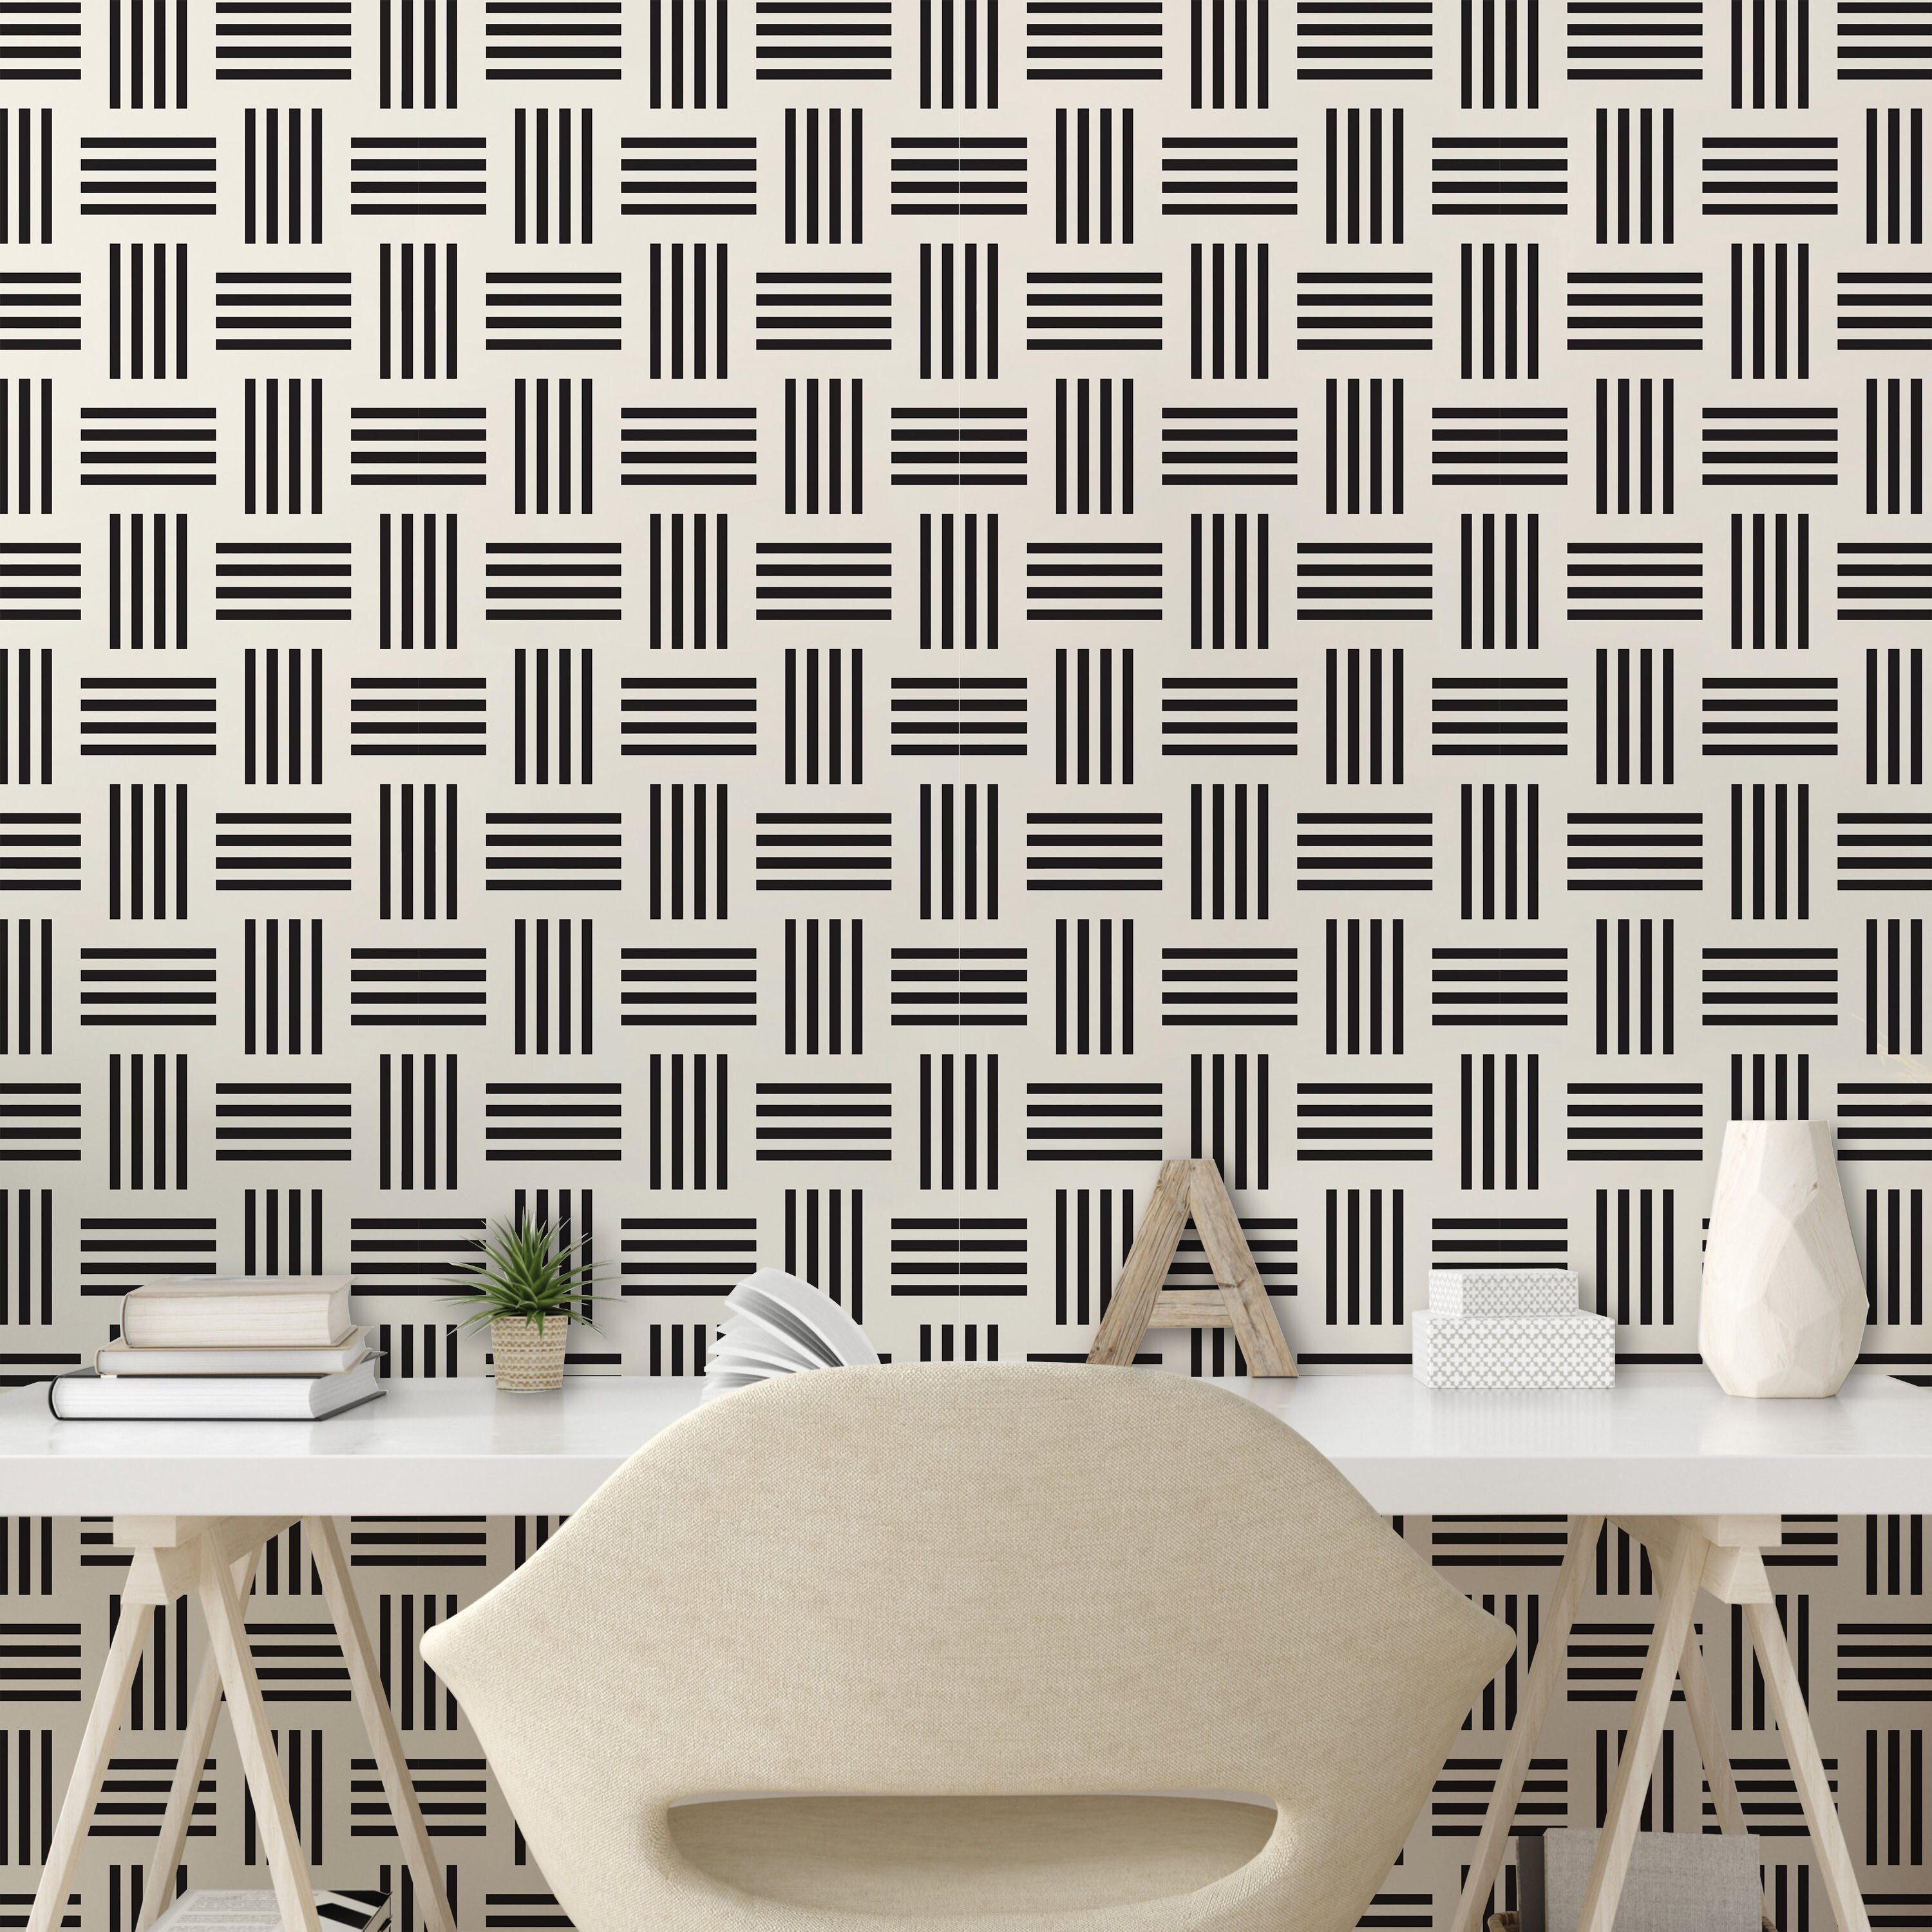 Abakuhaus Vinyltapete Bars Küchenakzent, Modern Symmetrische Muster Wohnzimmer Motiv selbstklebendes